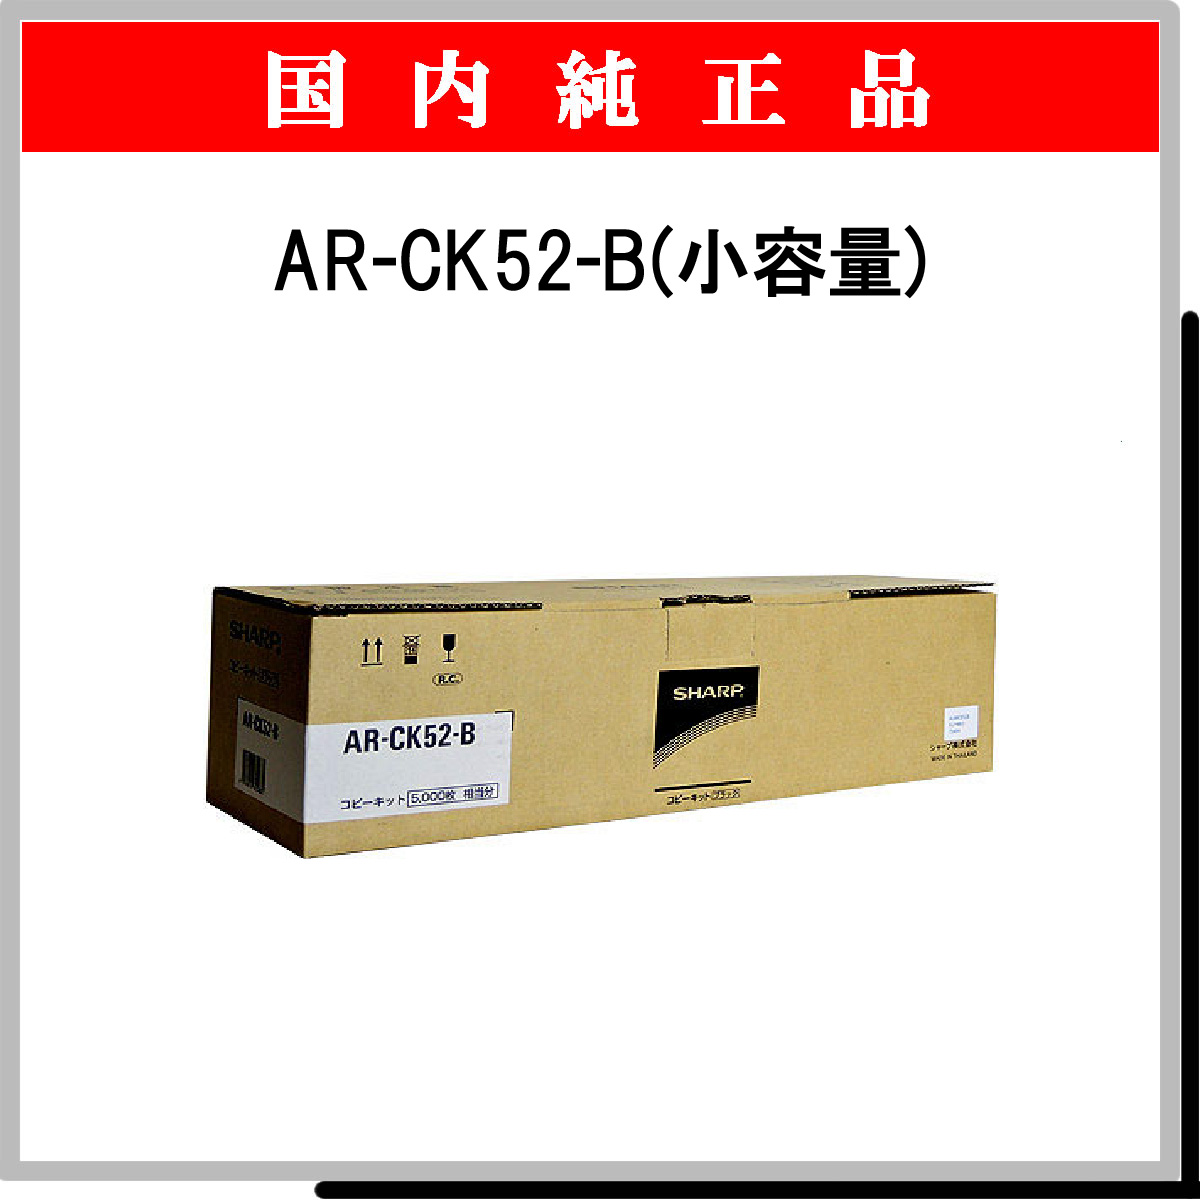 AR-CK52-B 純正 (小容量) - ウインドウを閉じる